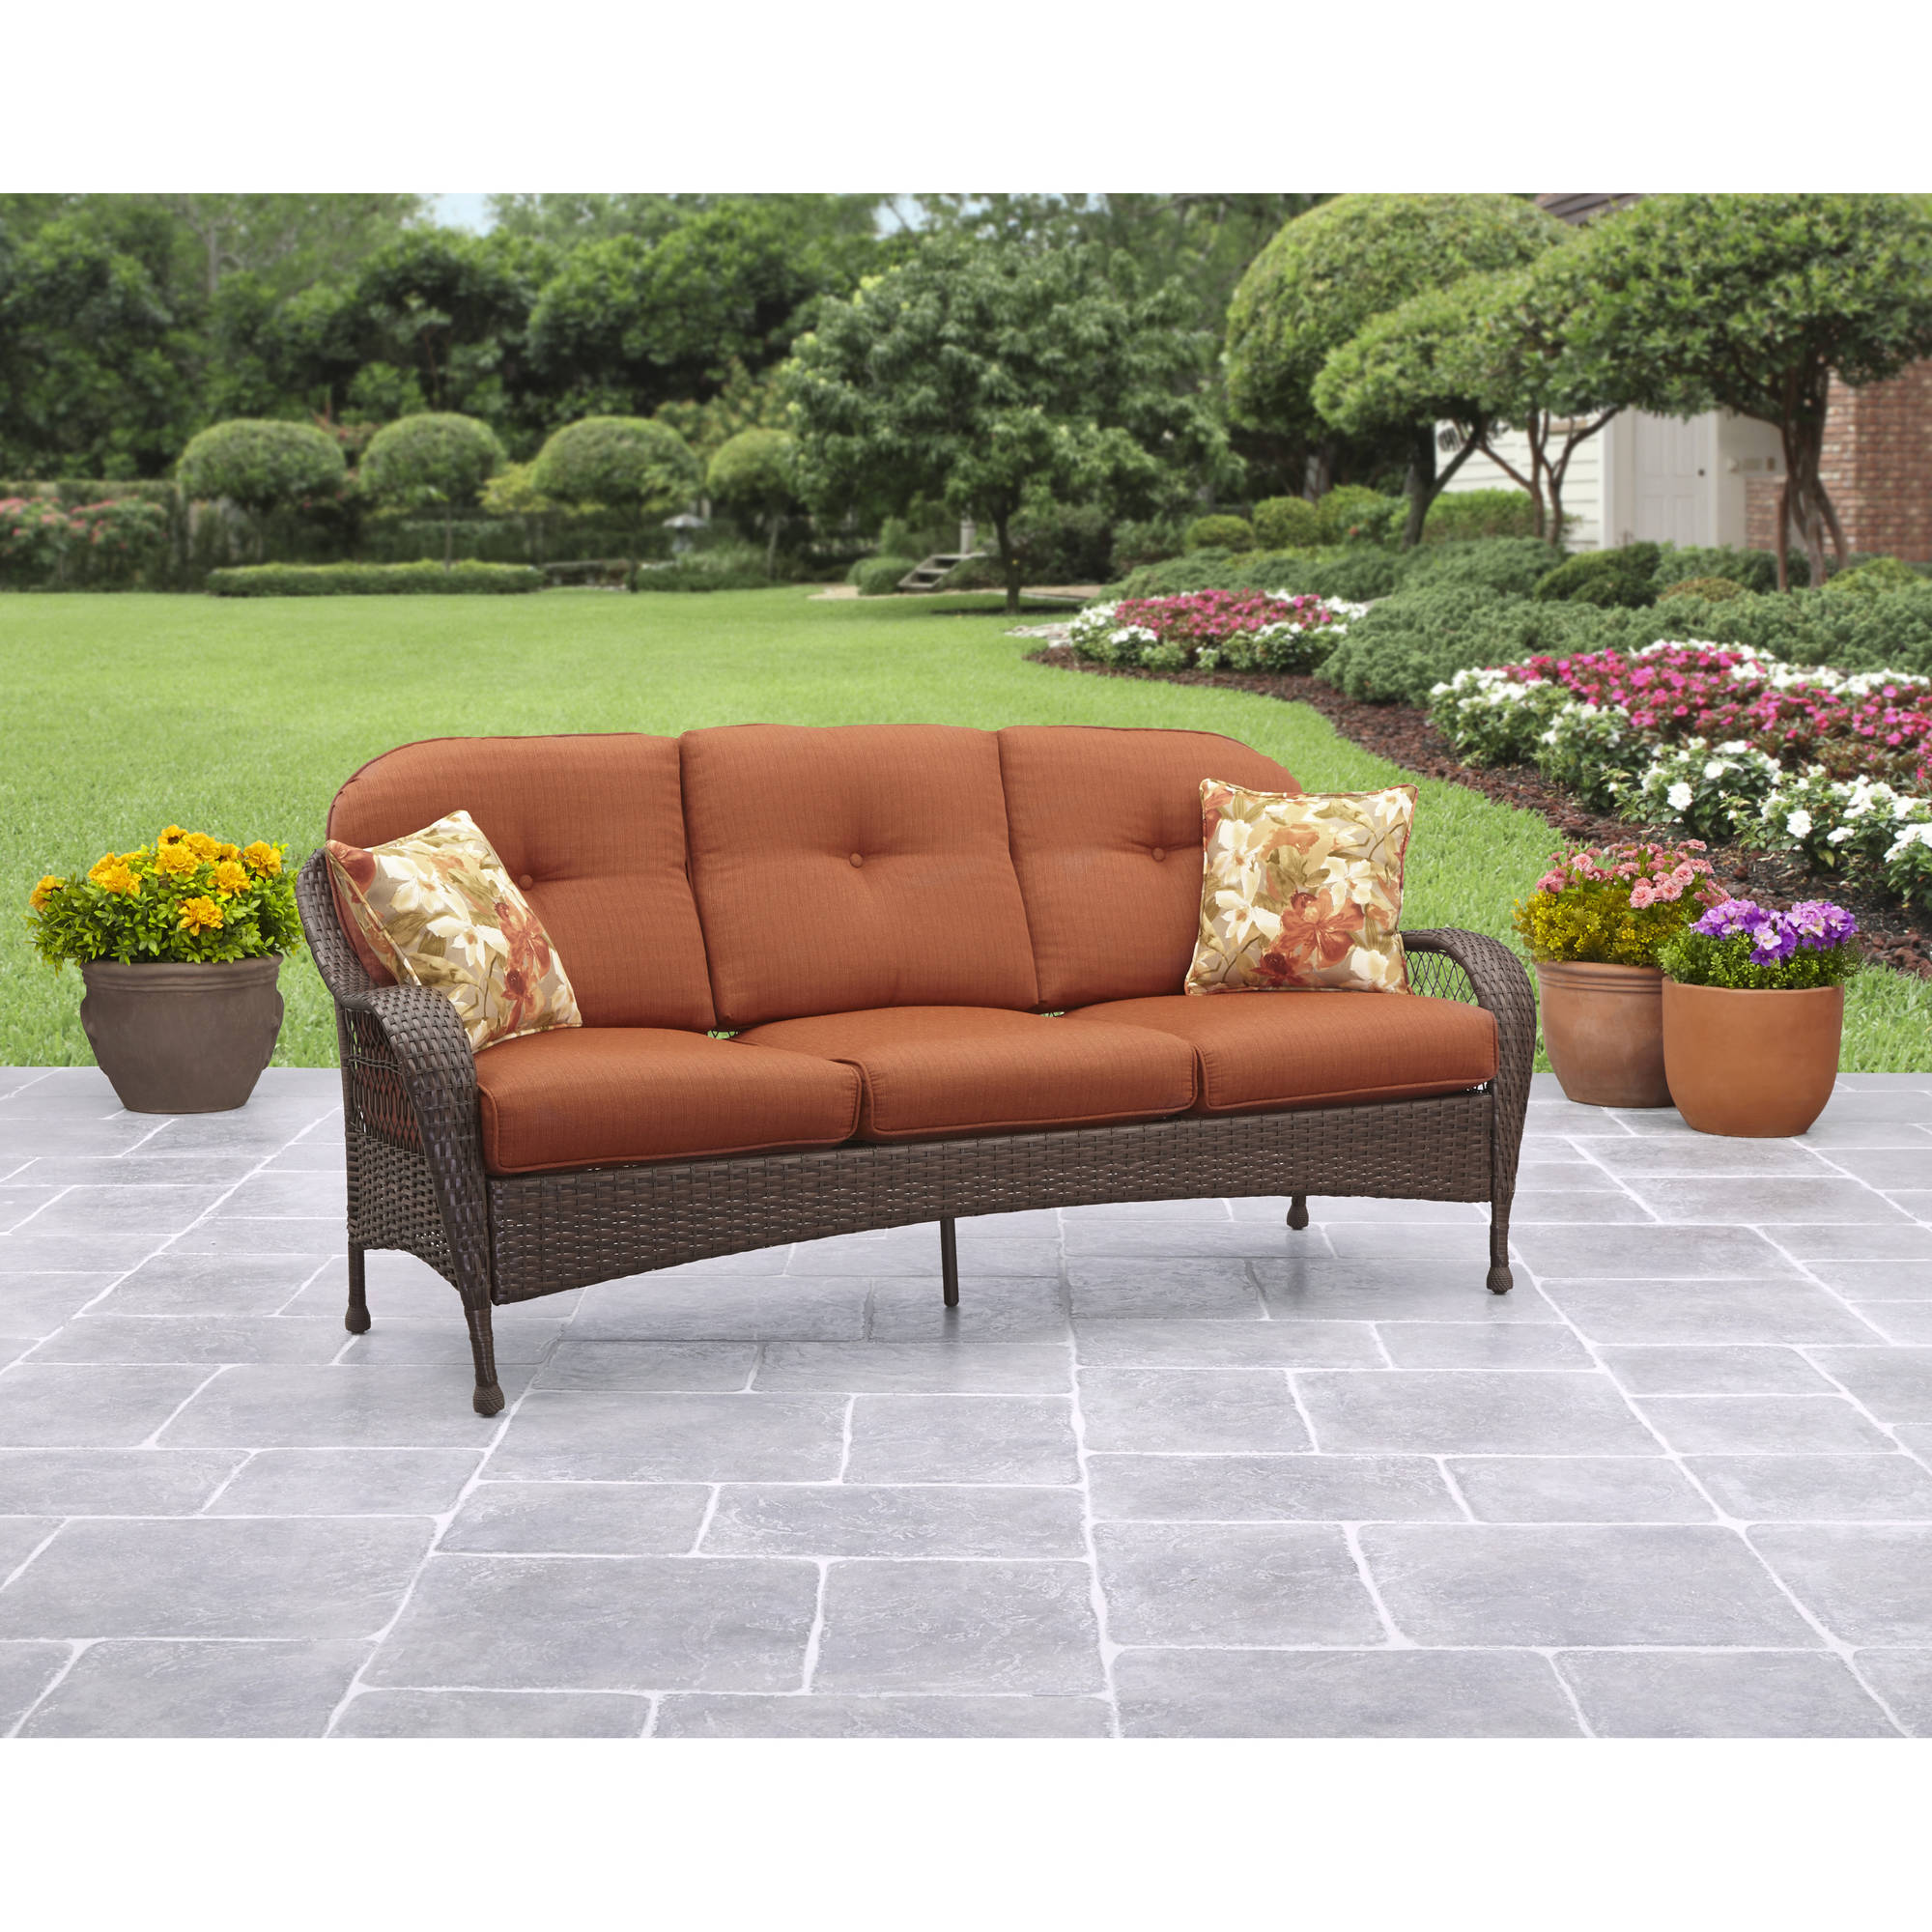 Better Homes and Gardens Azalea Ridge outdoor sofa for $139